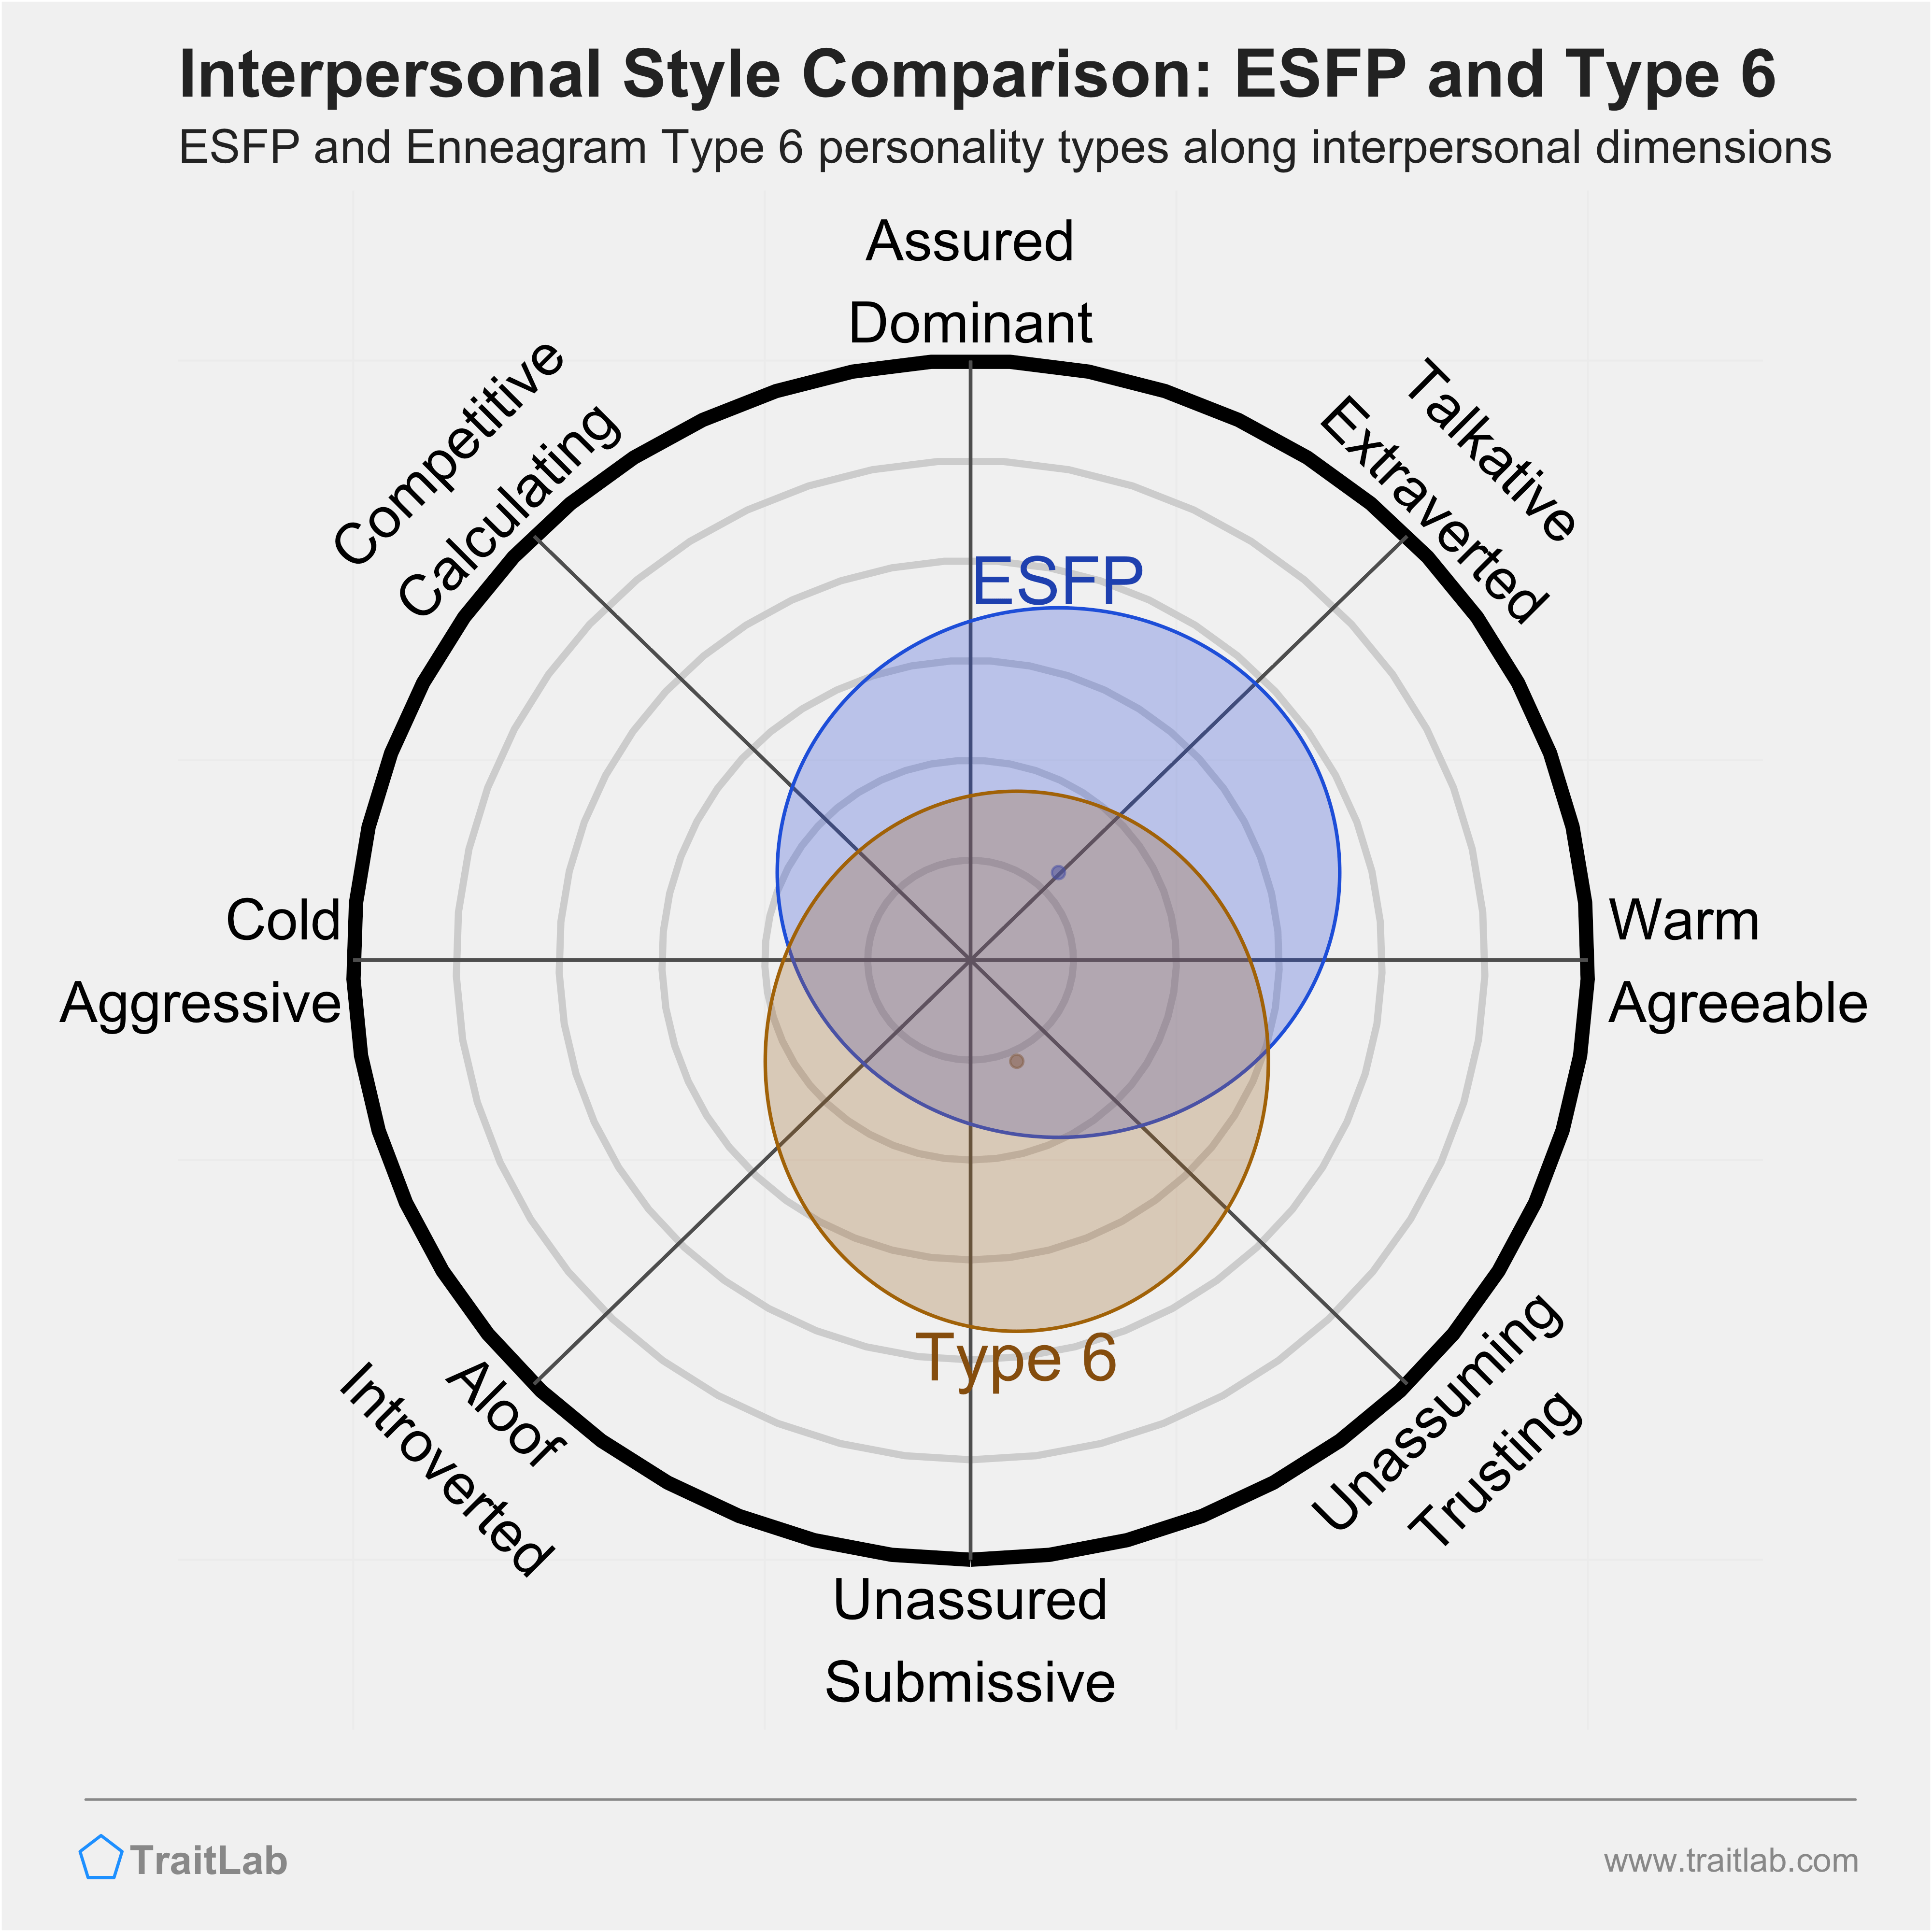 Enneagram ESFP and Type 6 comparison across interpersonal dimensions